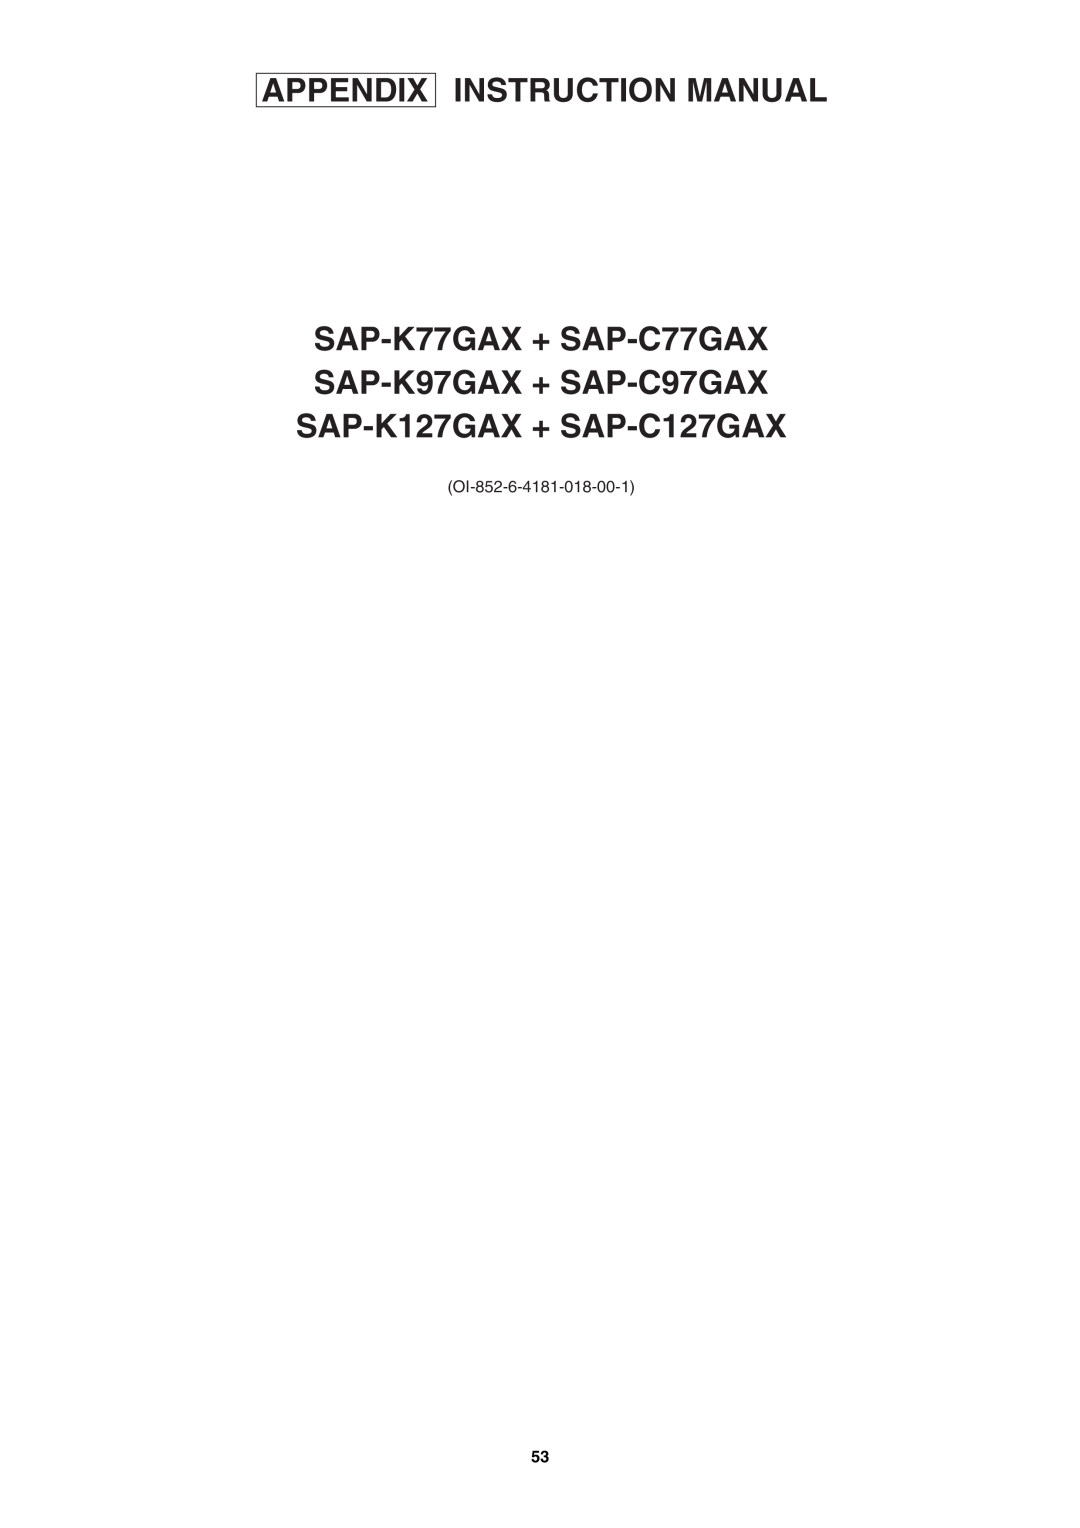 Sanyo Sanyo Split System Air Conditoner, SAP-K77RAX service manual OI-852-6-4181-018-00-1 